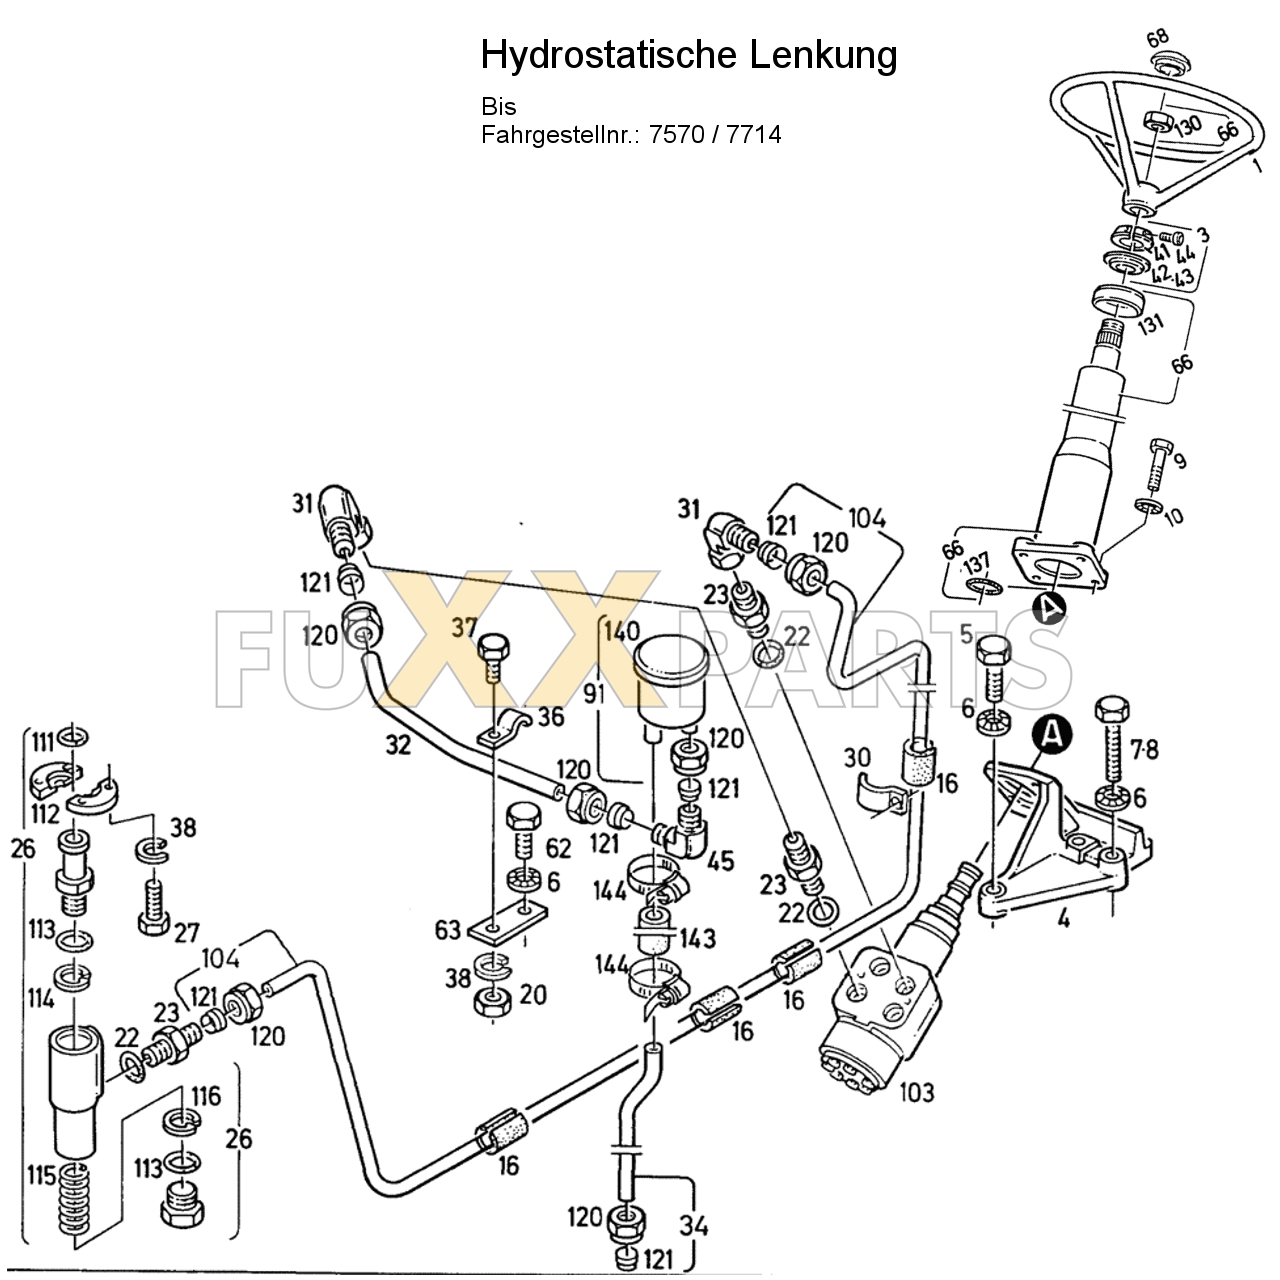 D 6807 Hydrostatische Lenkung 1.1